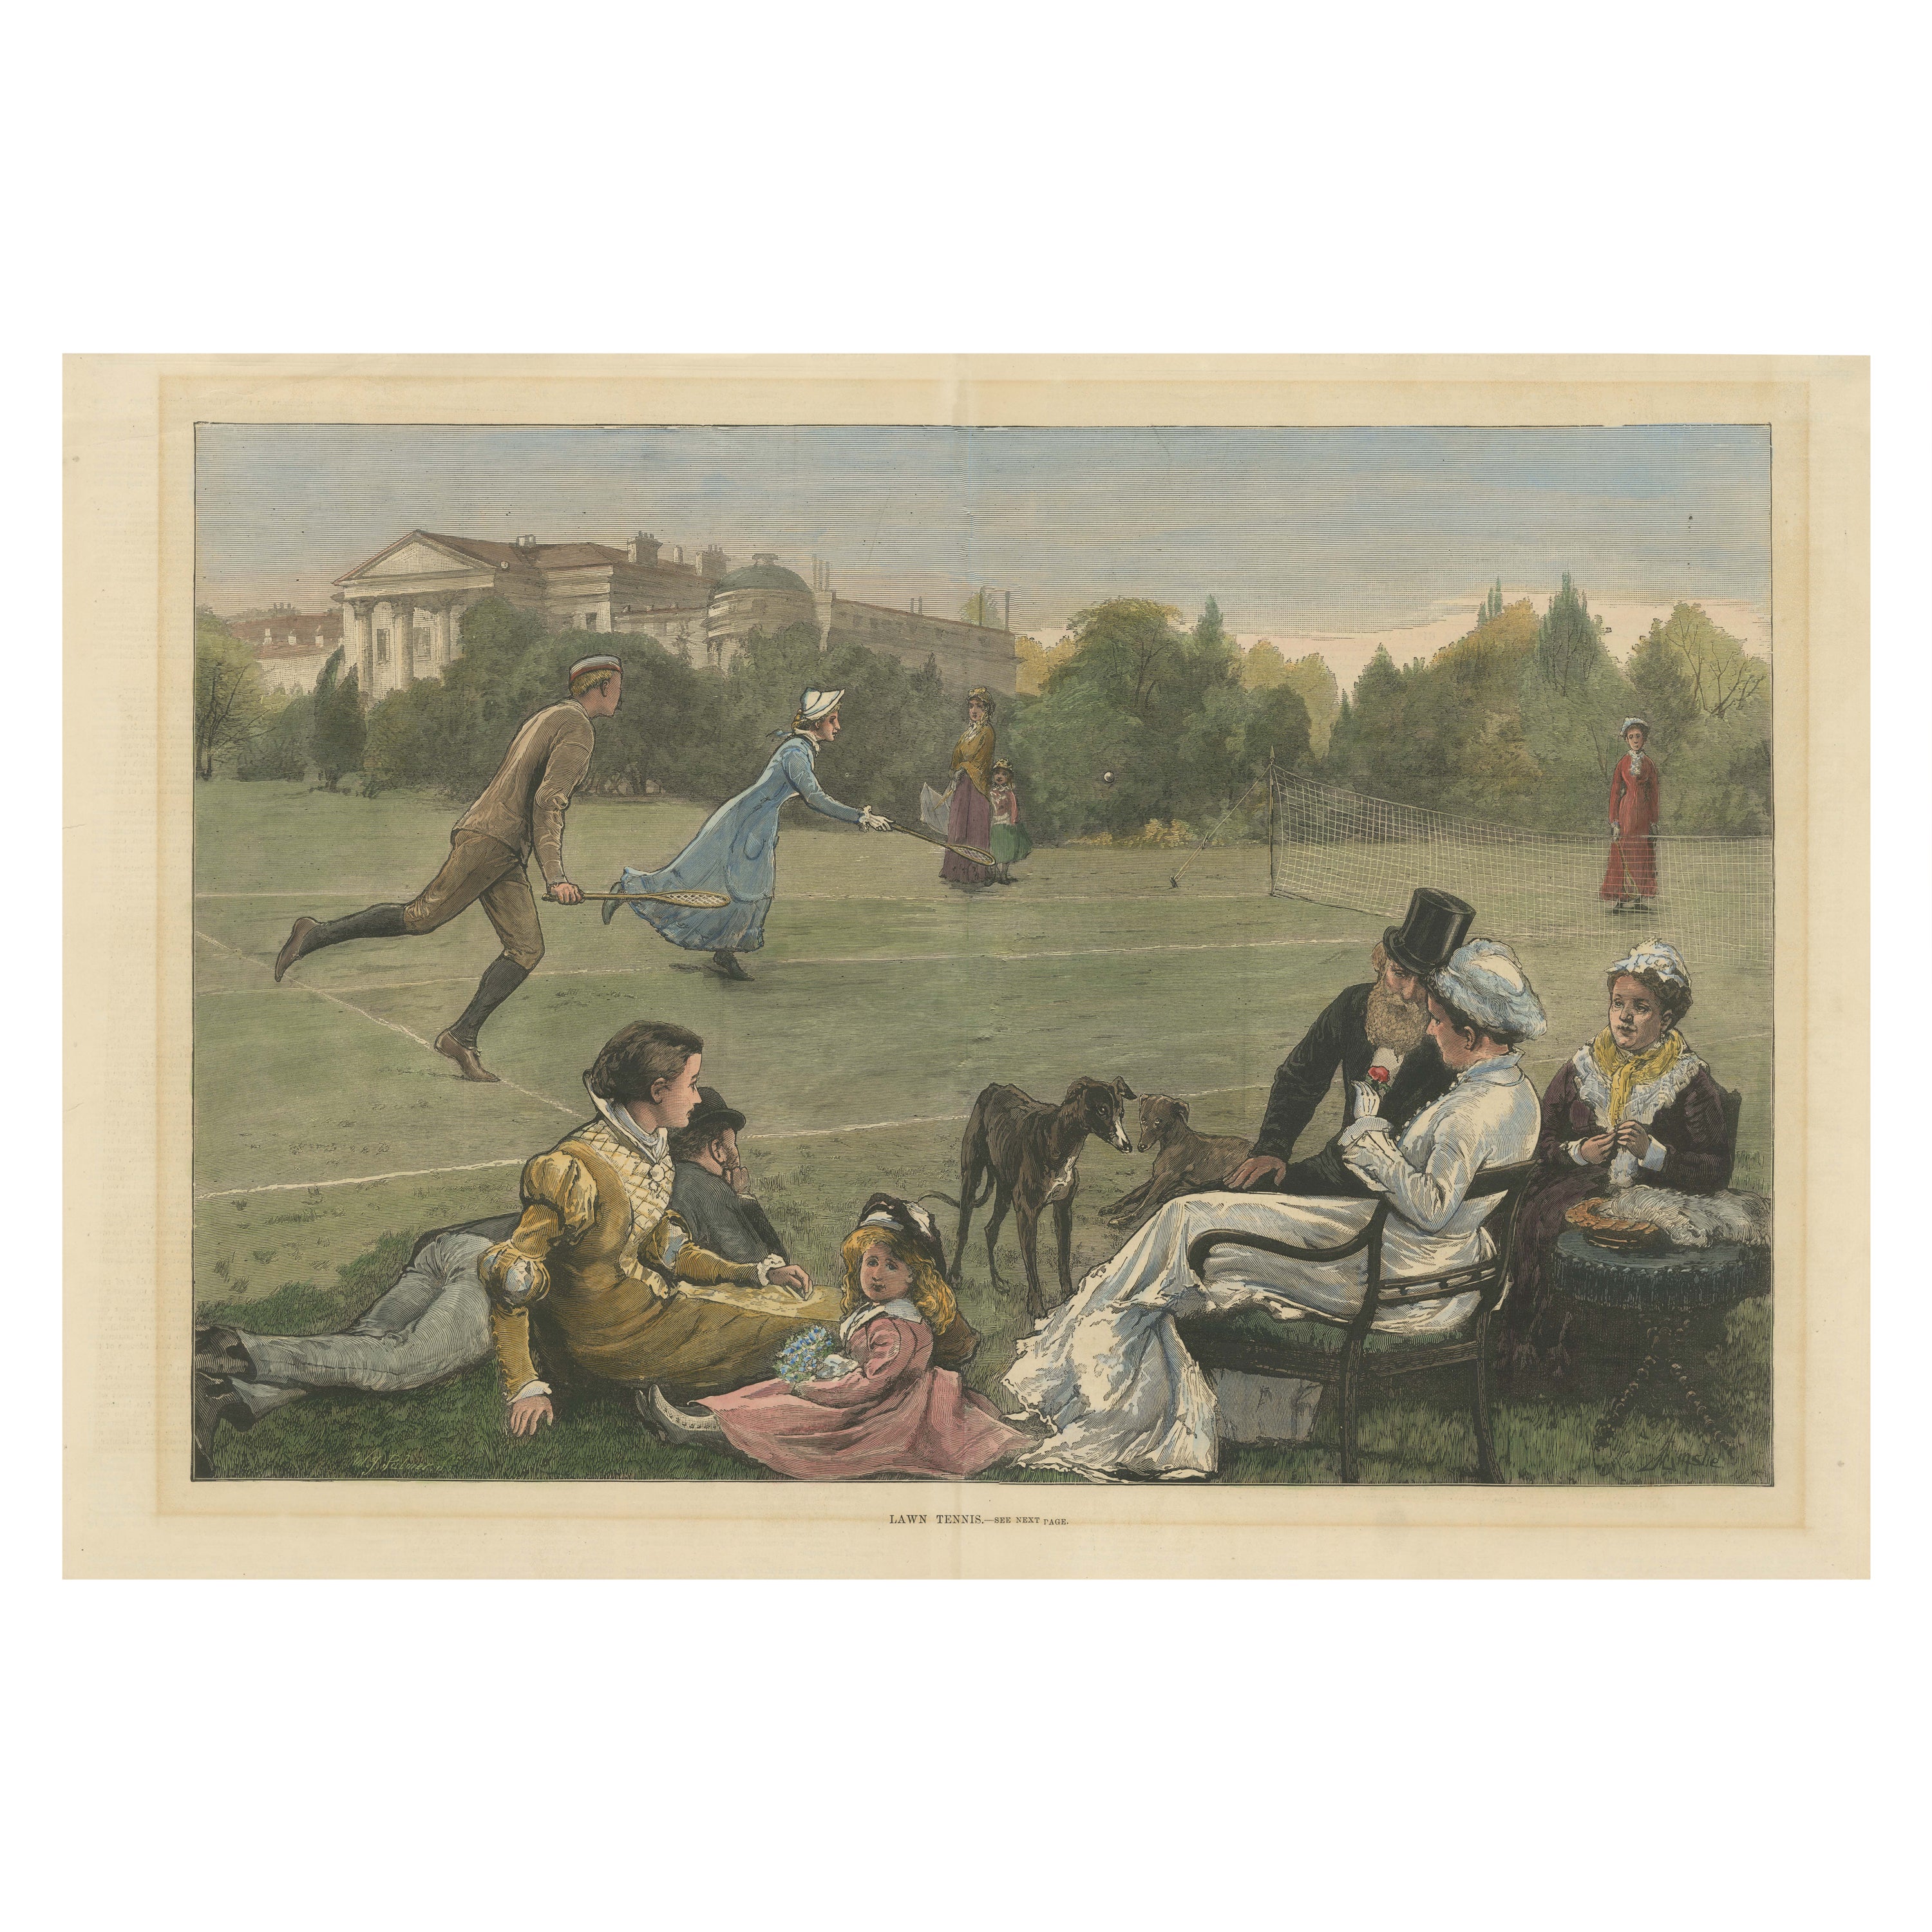 Victorian Leisure: Lawn Tennis in Hyde Park by Alfred Edward Emslie, circa 1880